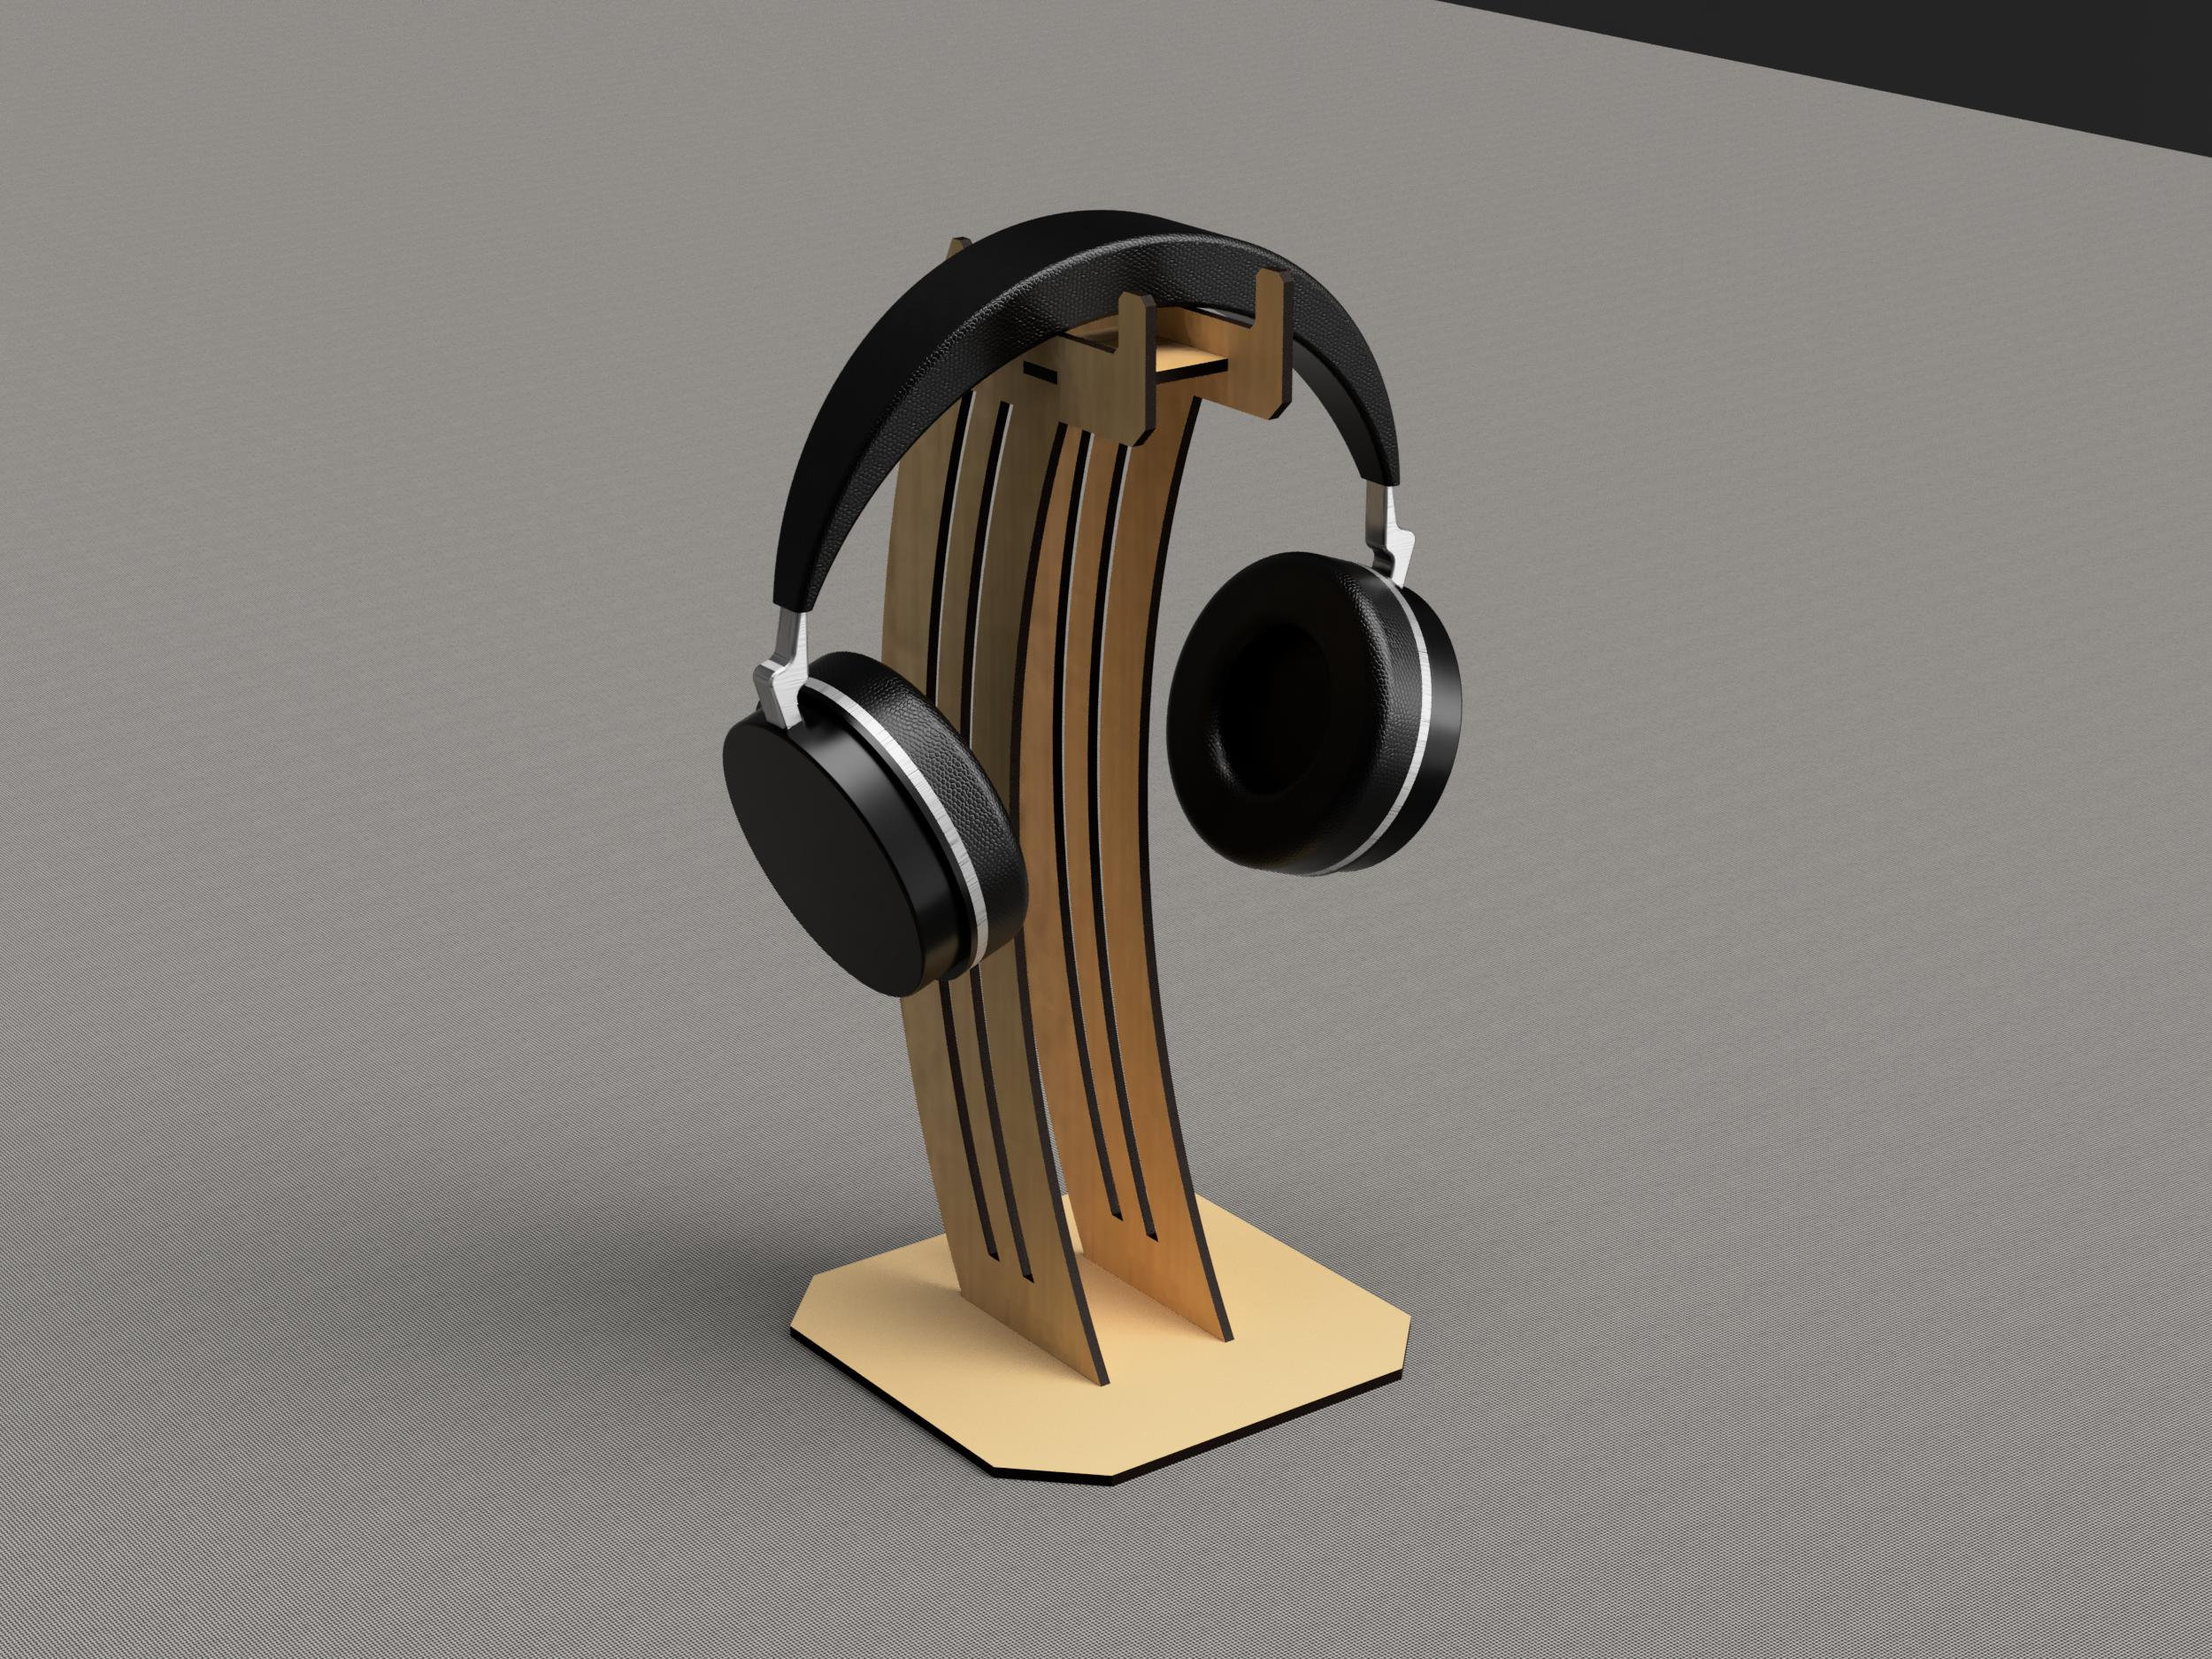 Wooden wired earphone holder! : r/lasercutting